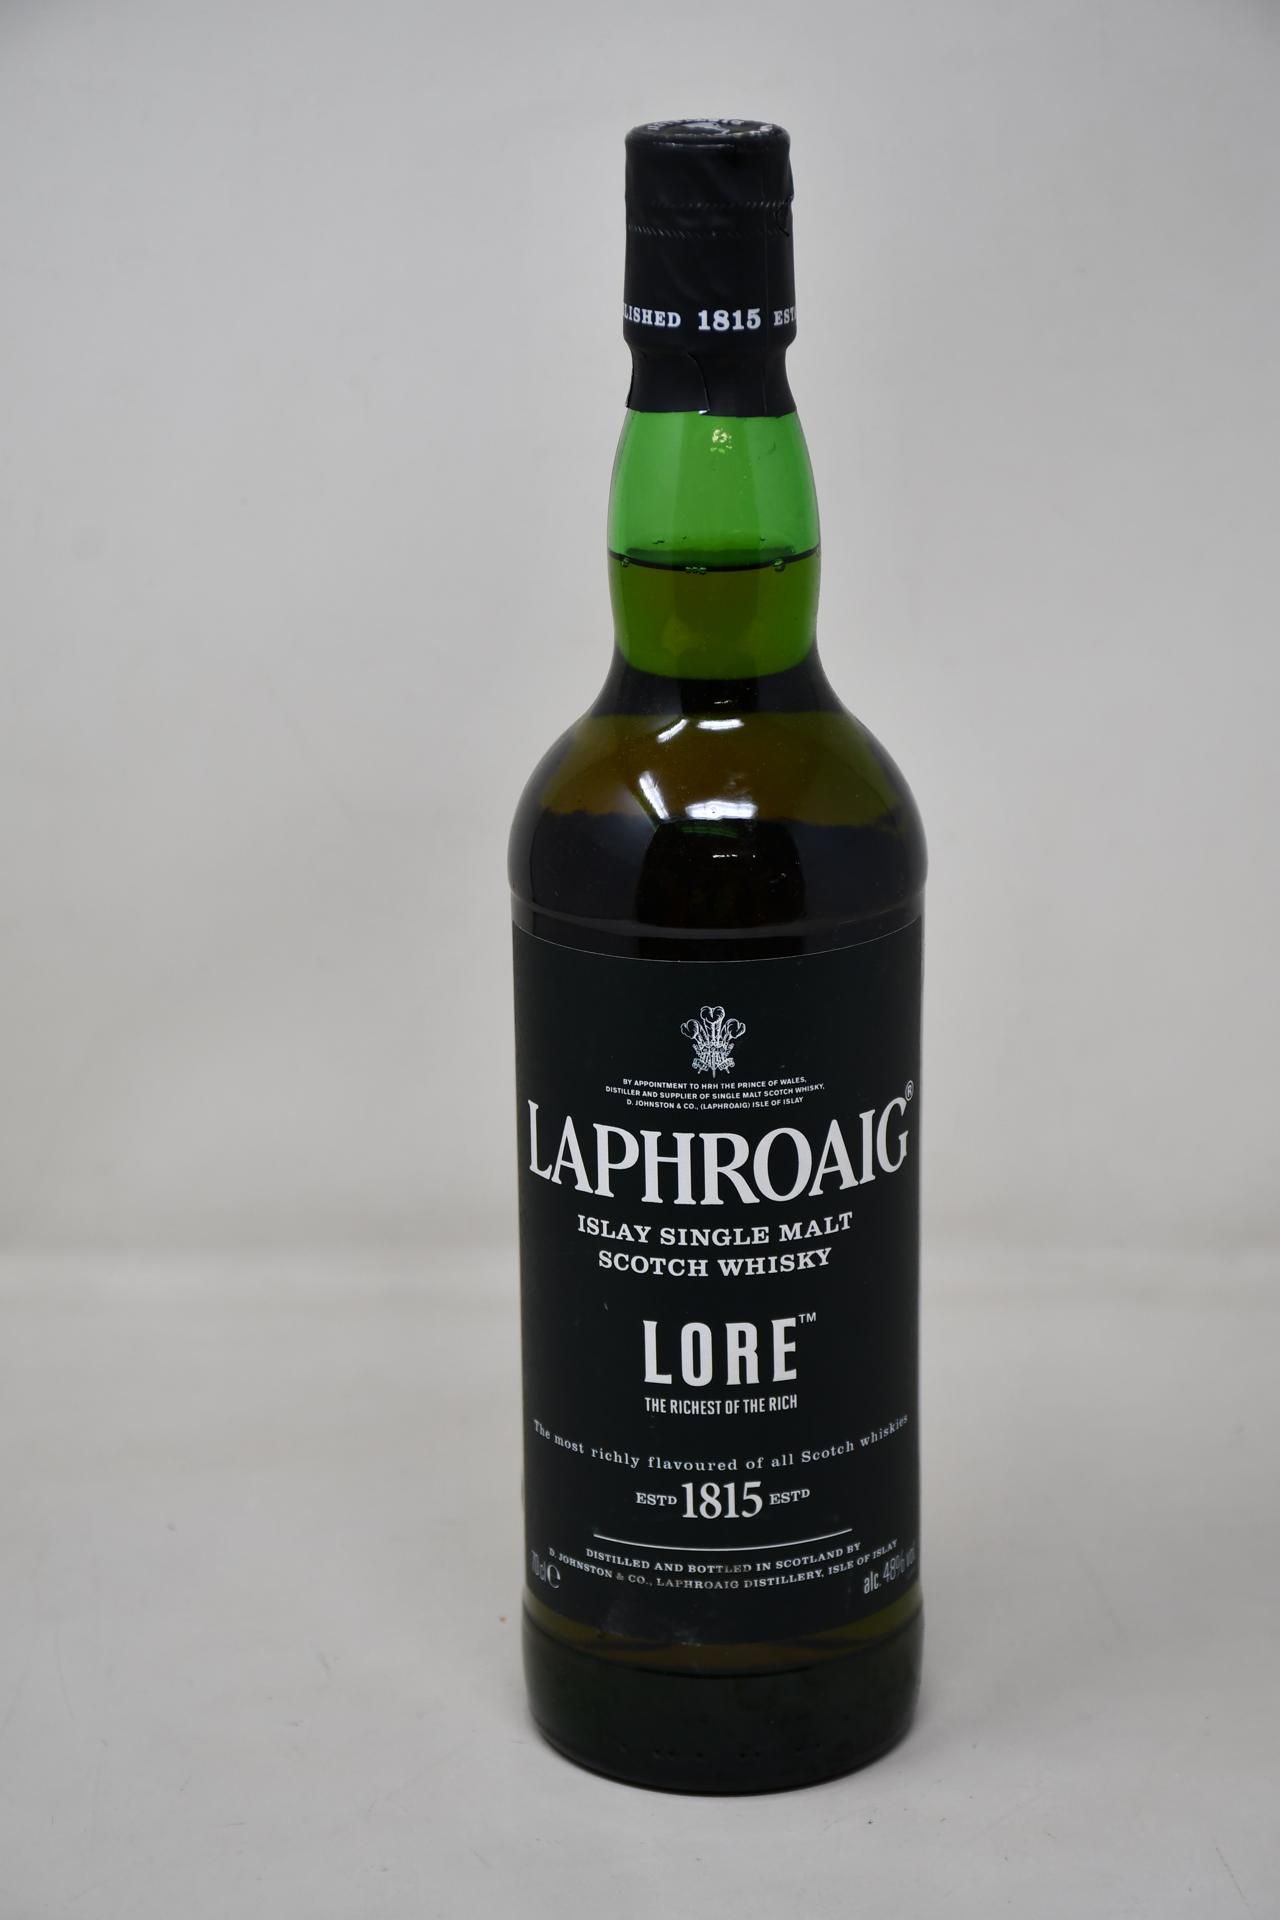 Laphroaig lore Islay Single Malt Scotch Whisky (700ml) (Over 18s only).